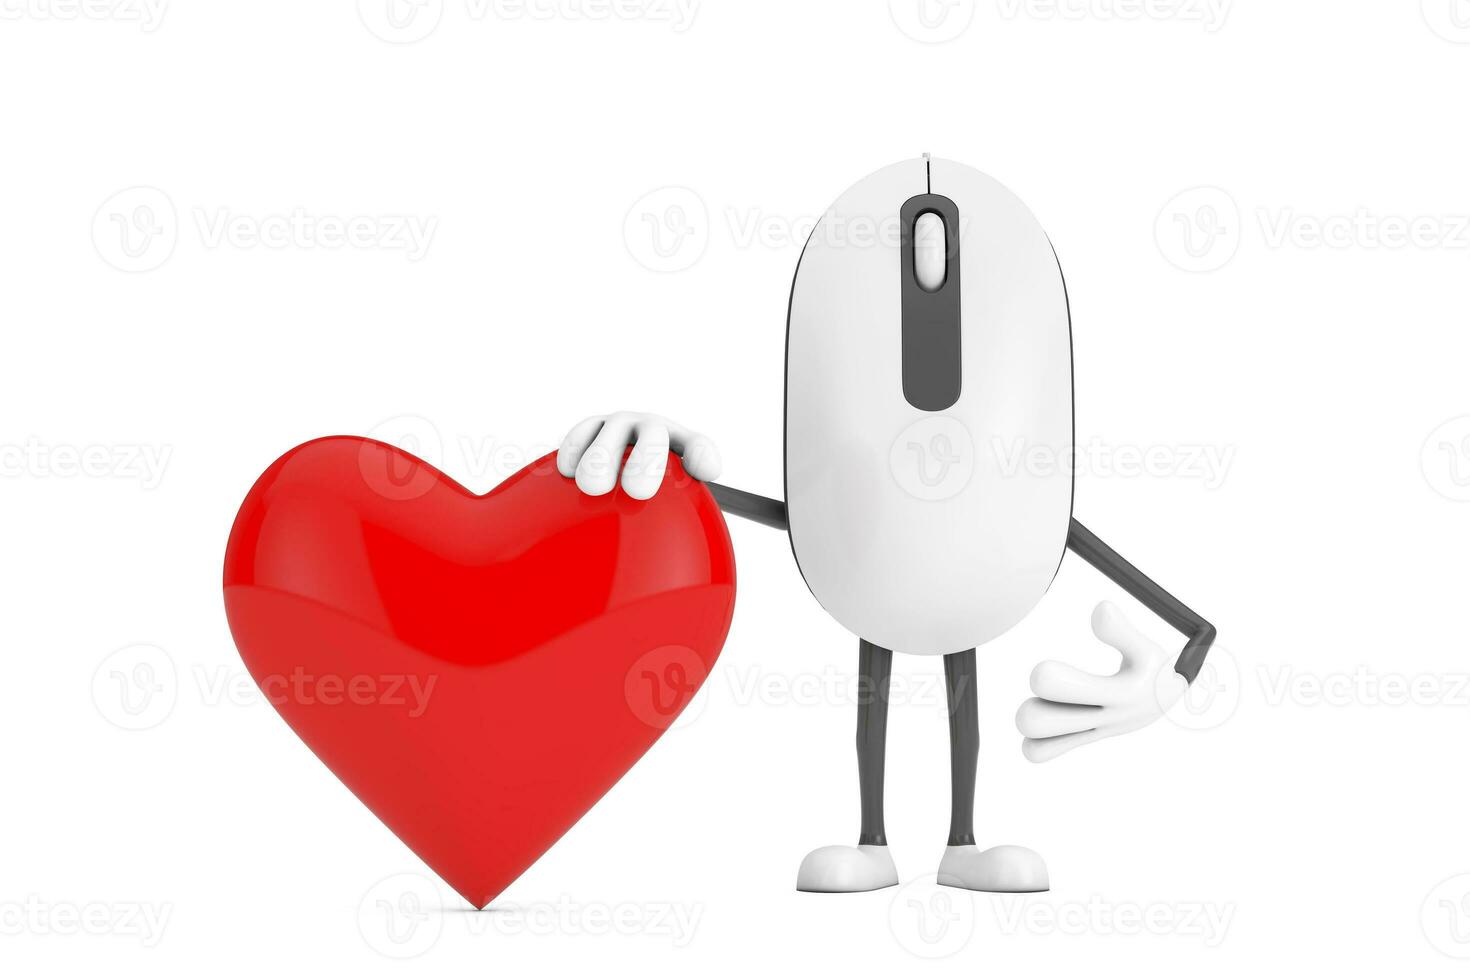 computadora ratón dibujos animados persona personaje mascota con rojo corazón. 3d representación foto